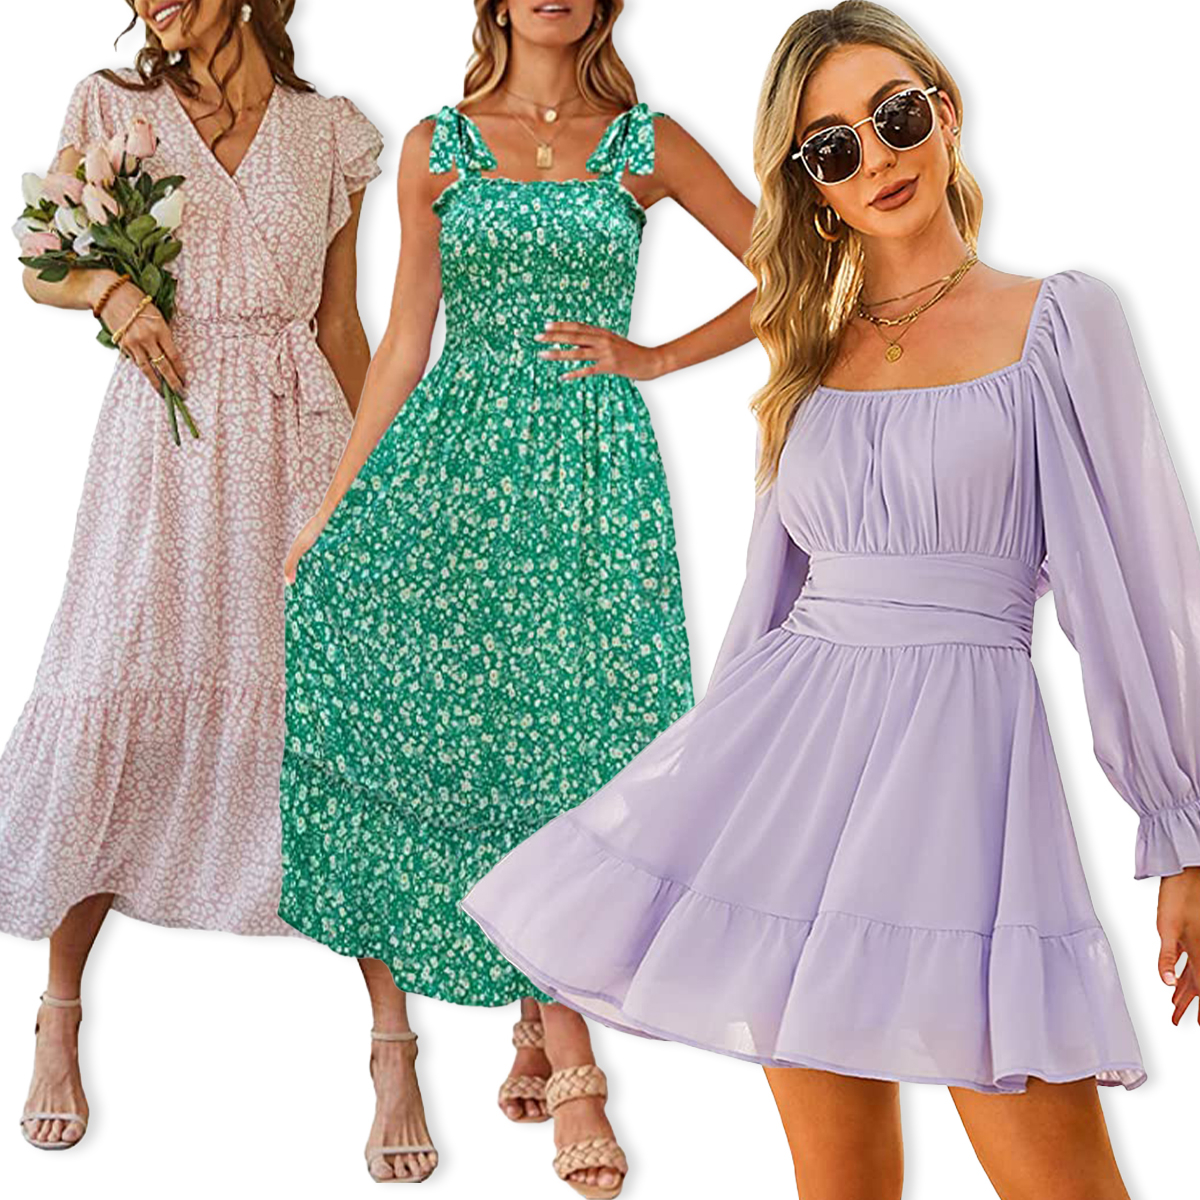 3 Cute Summer Dresses Under $35 - Merrick's Art